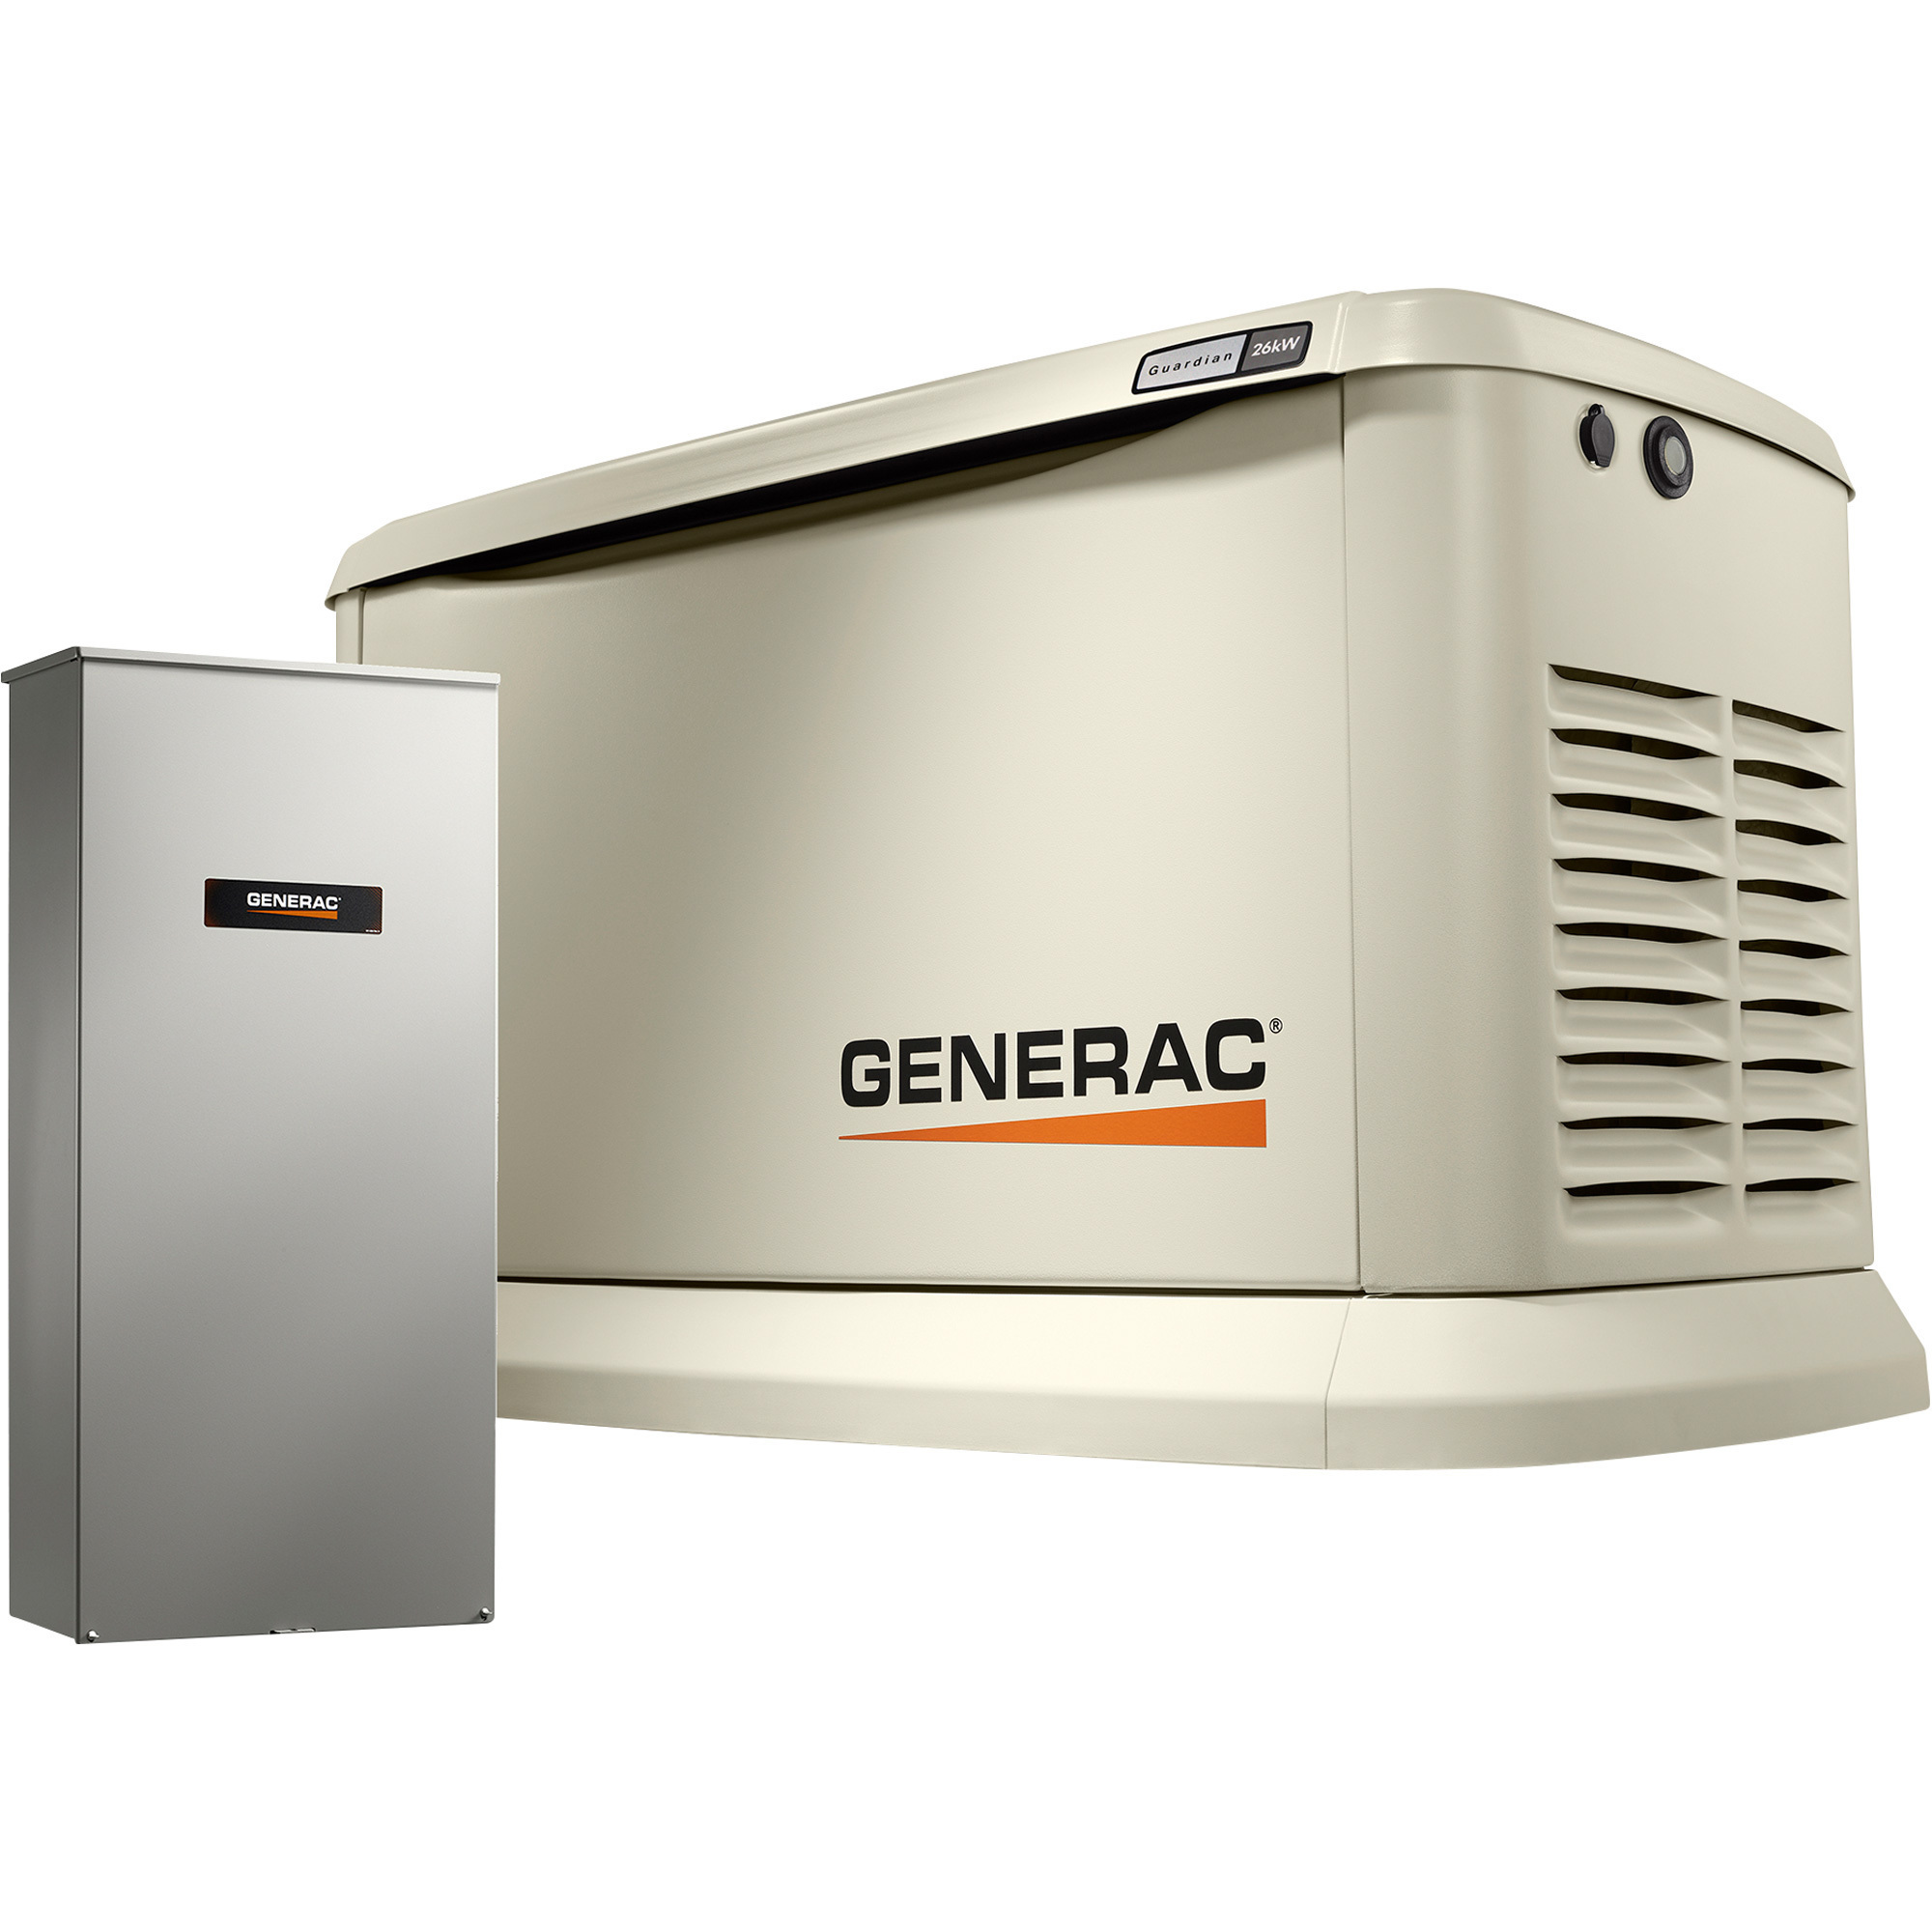 Generac Guardian Series Home Standby Generator, 26kW (LP)/22.5kW (NG), 200 Amp Transfer Switch, Aluminum Enclosure, Model 7291